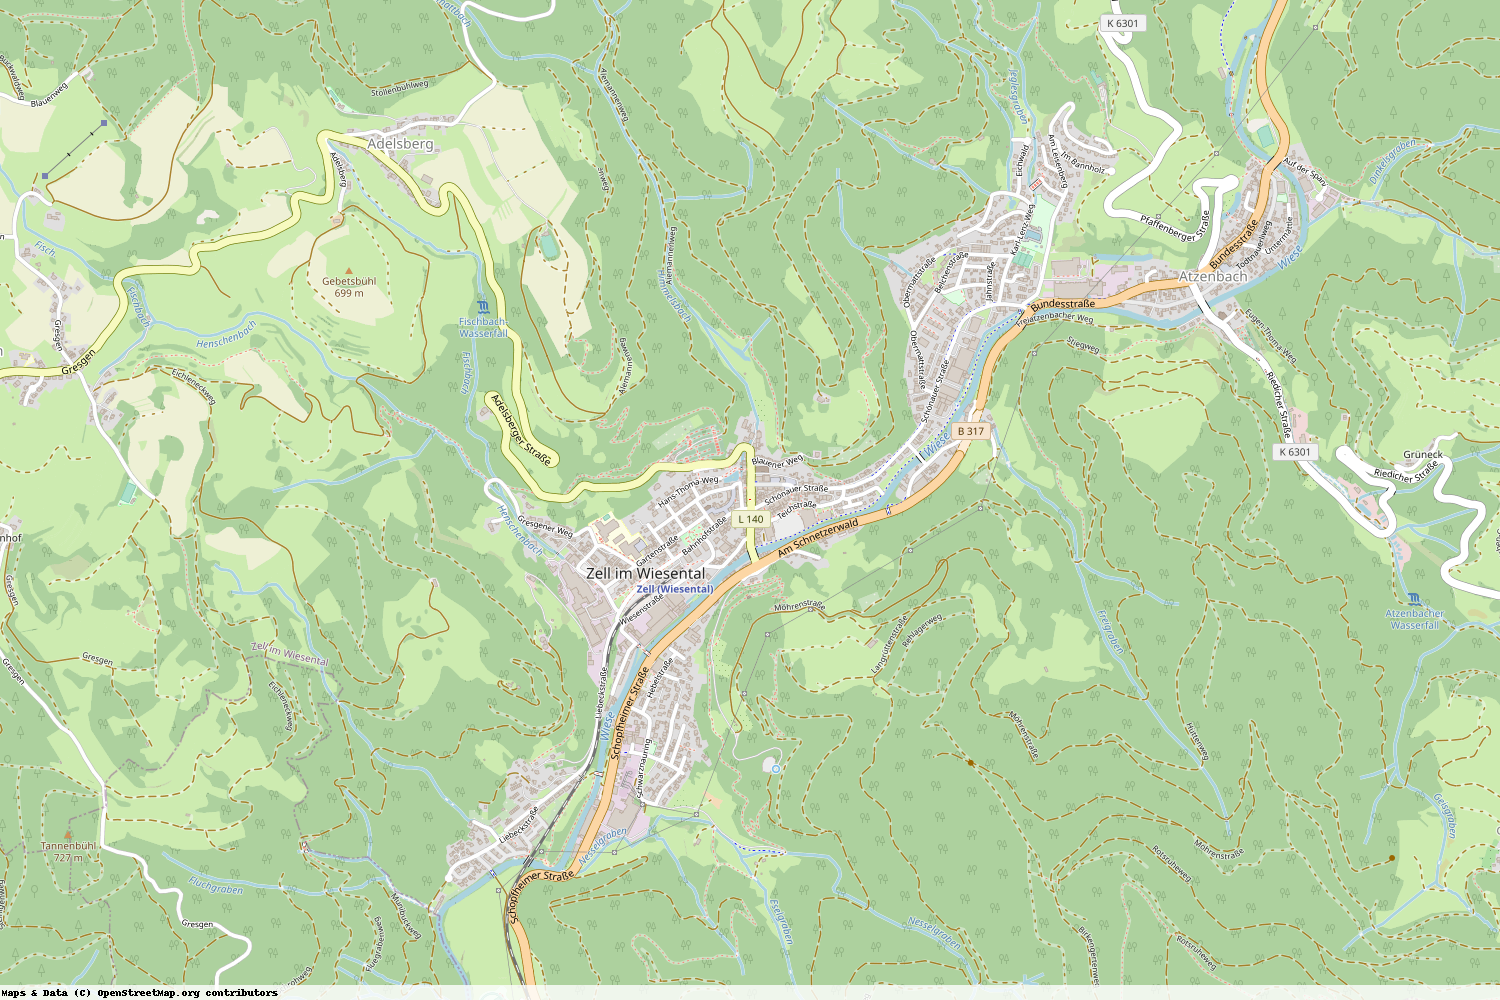 Ist gerade Stromausfall in Baden-Württemberg - Lörrach - Zell im Wiesental?